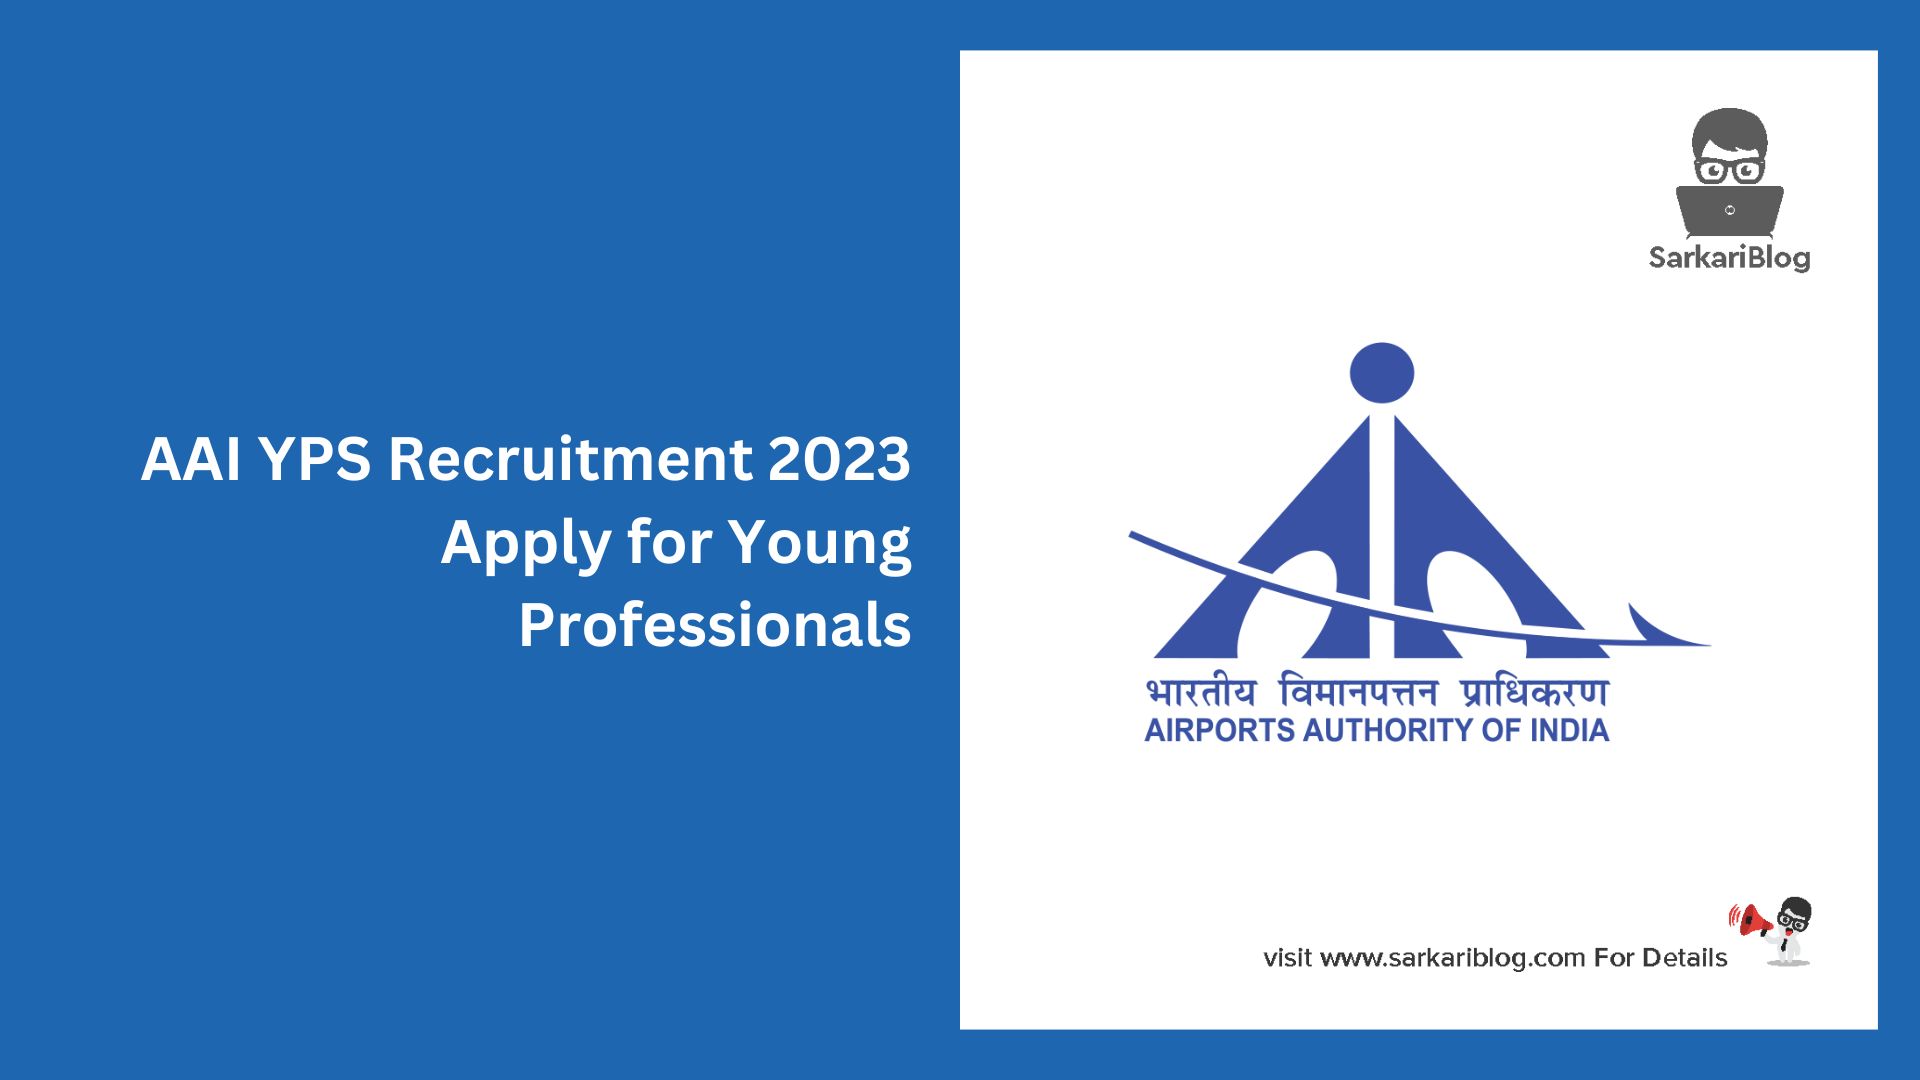 AAI YPS Recruitment 2023